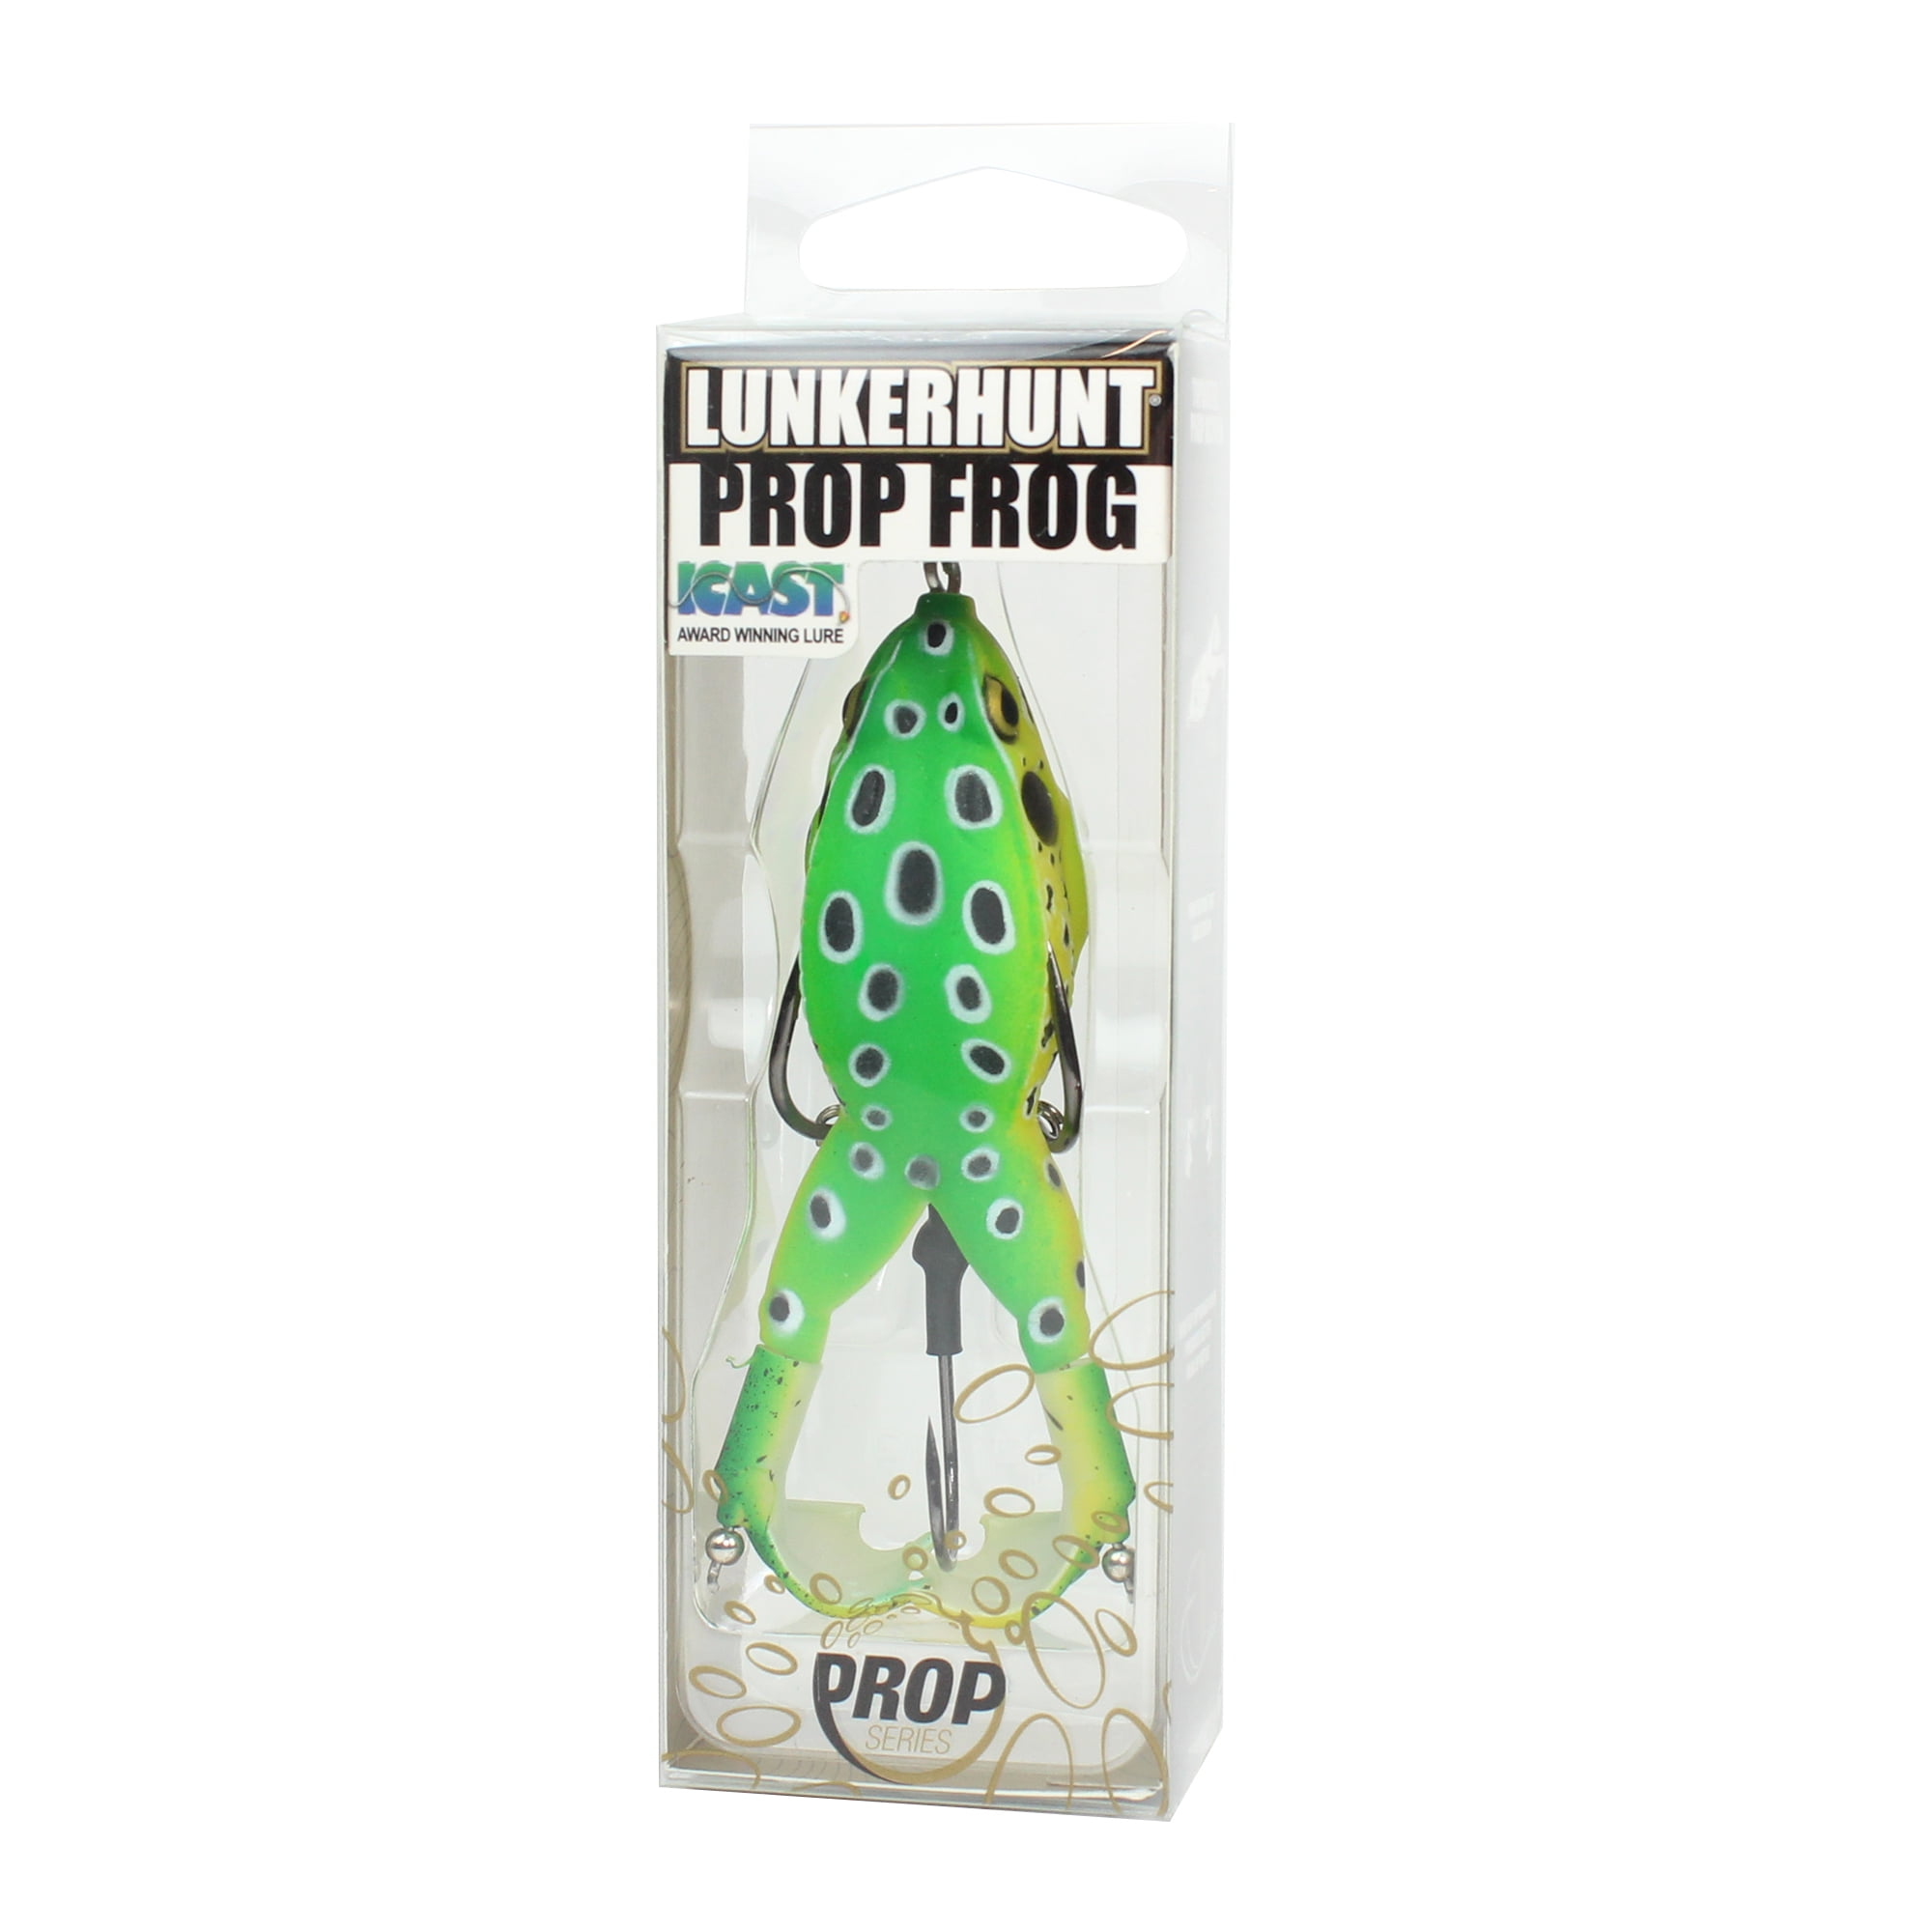 Lunkerhunt Prop Frog - Topwater Lure - Leopard,3.5in,1/2oz,Soft